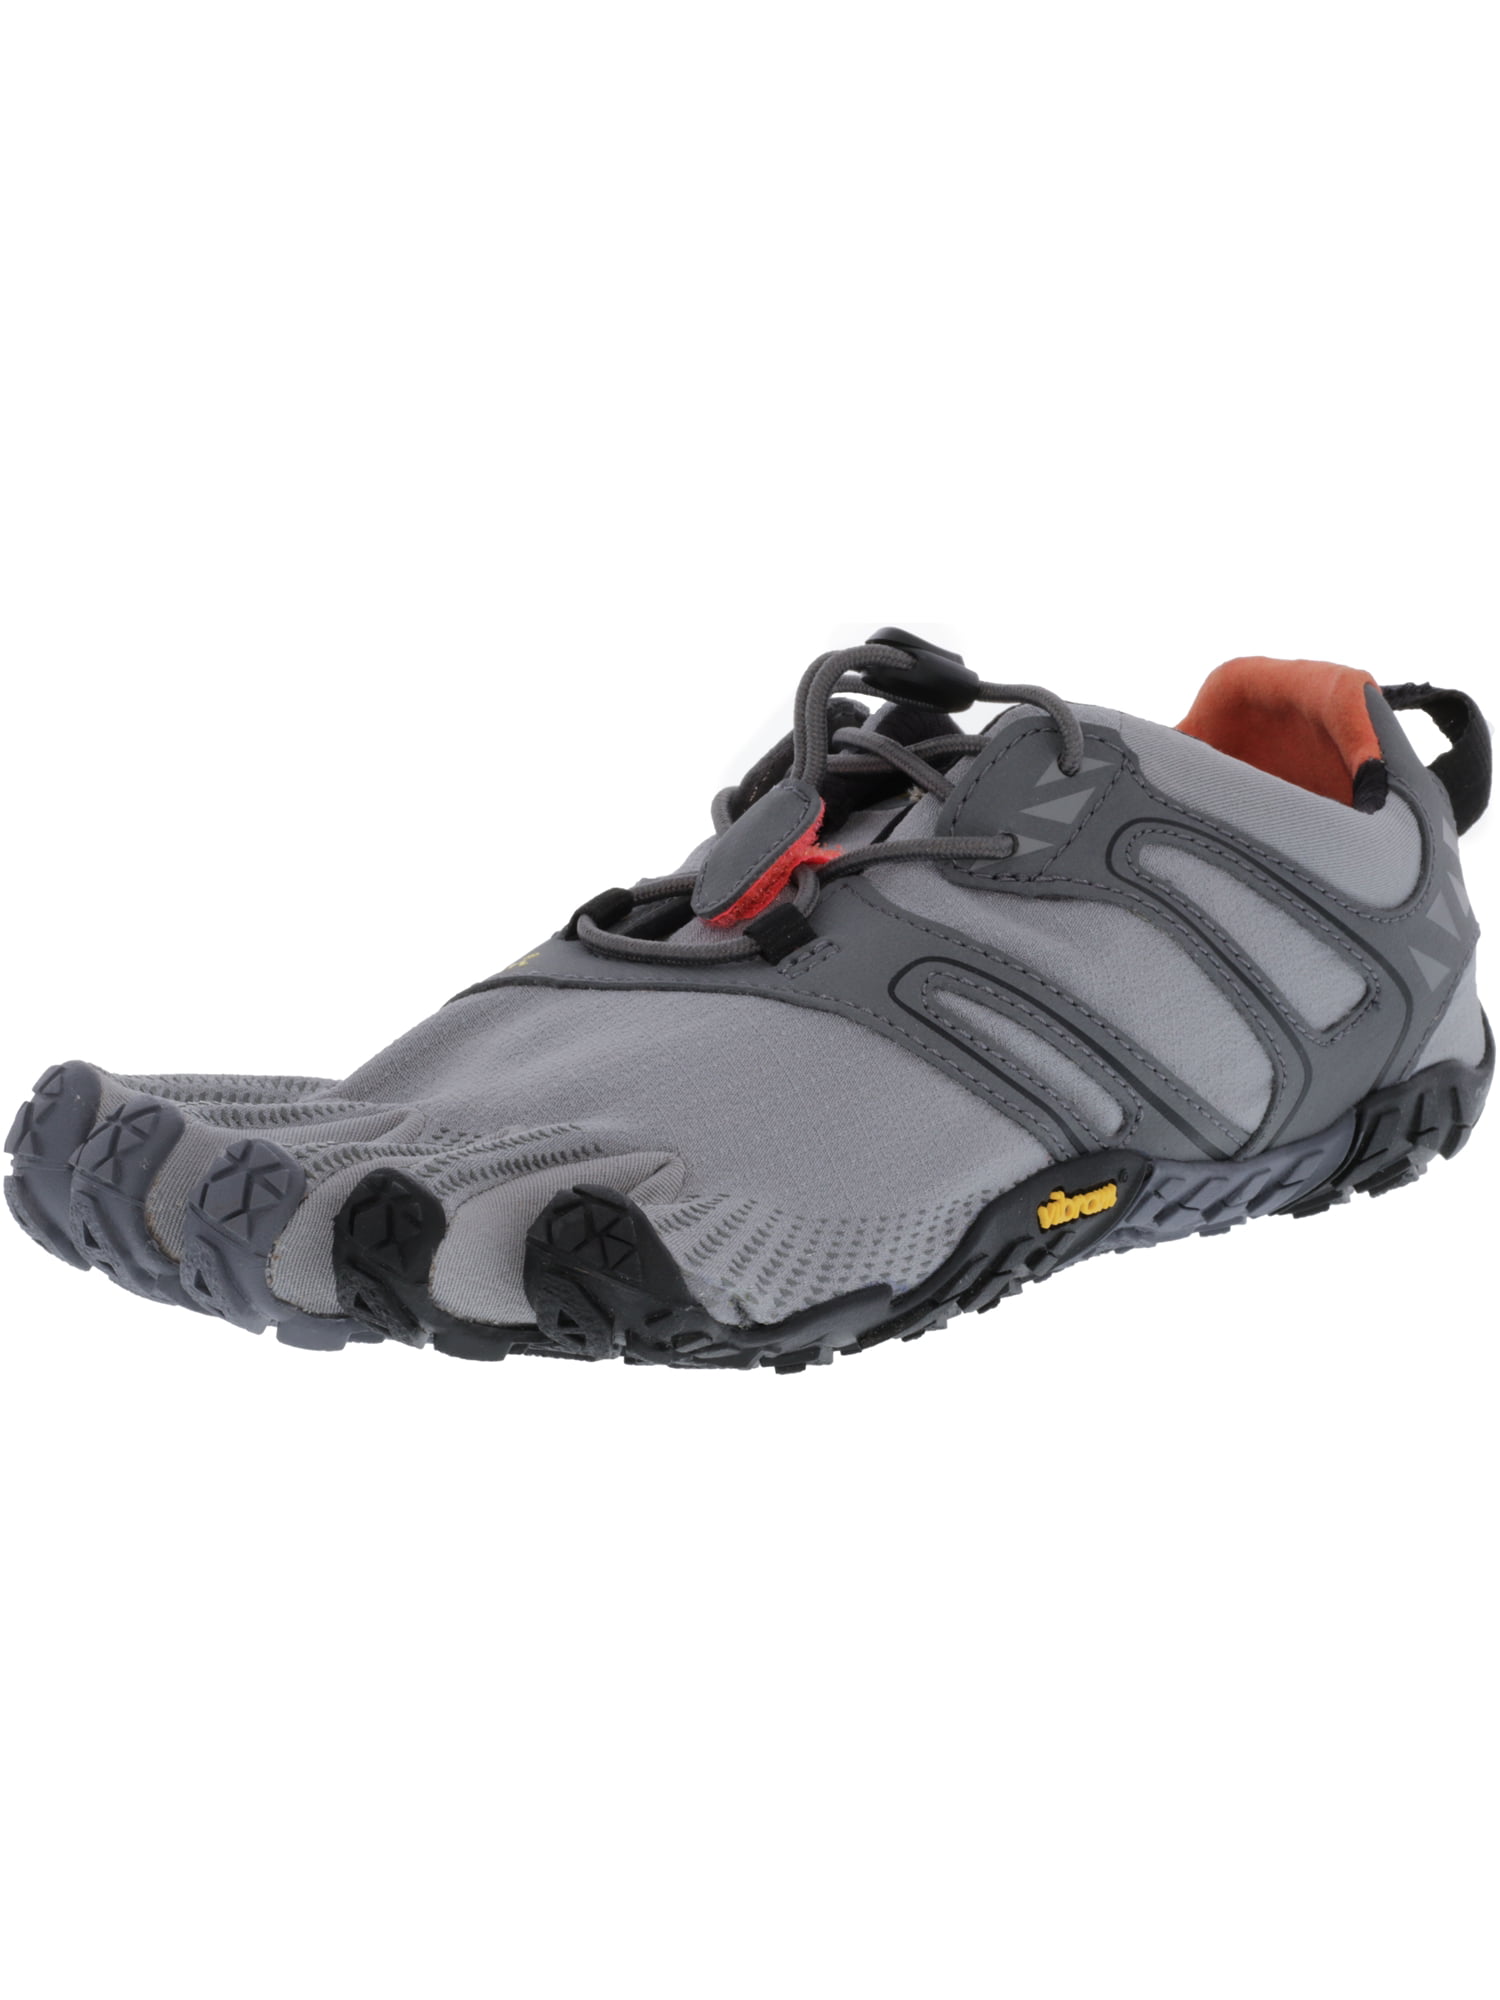 v trail shoes